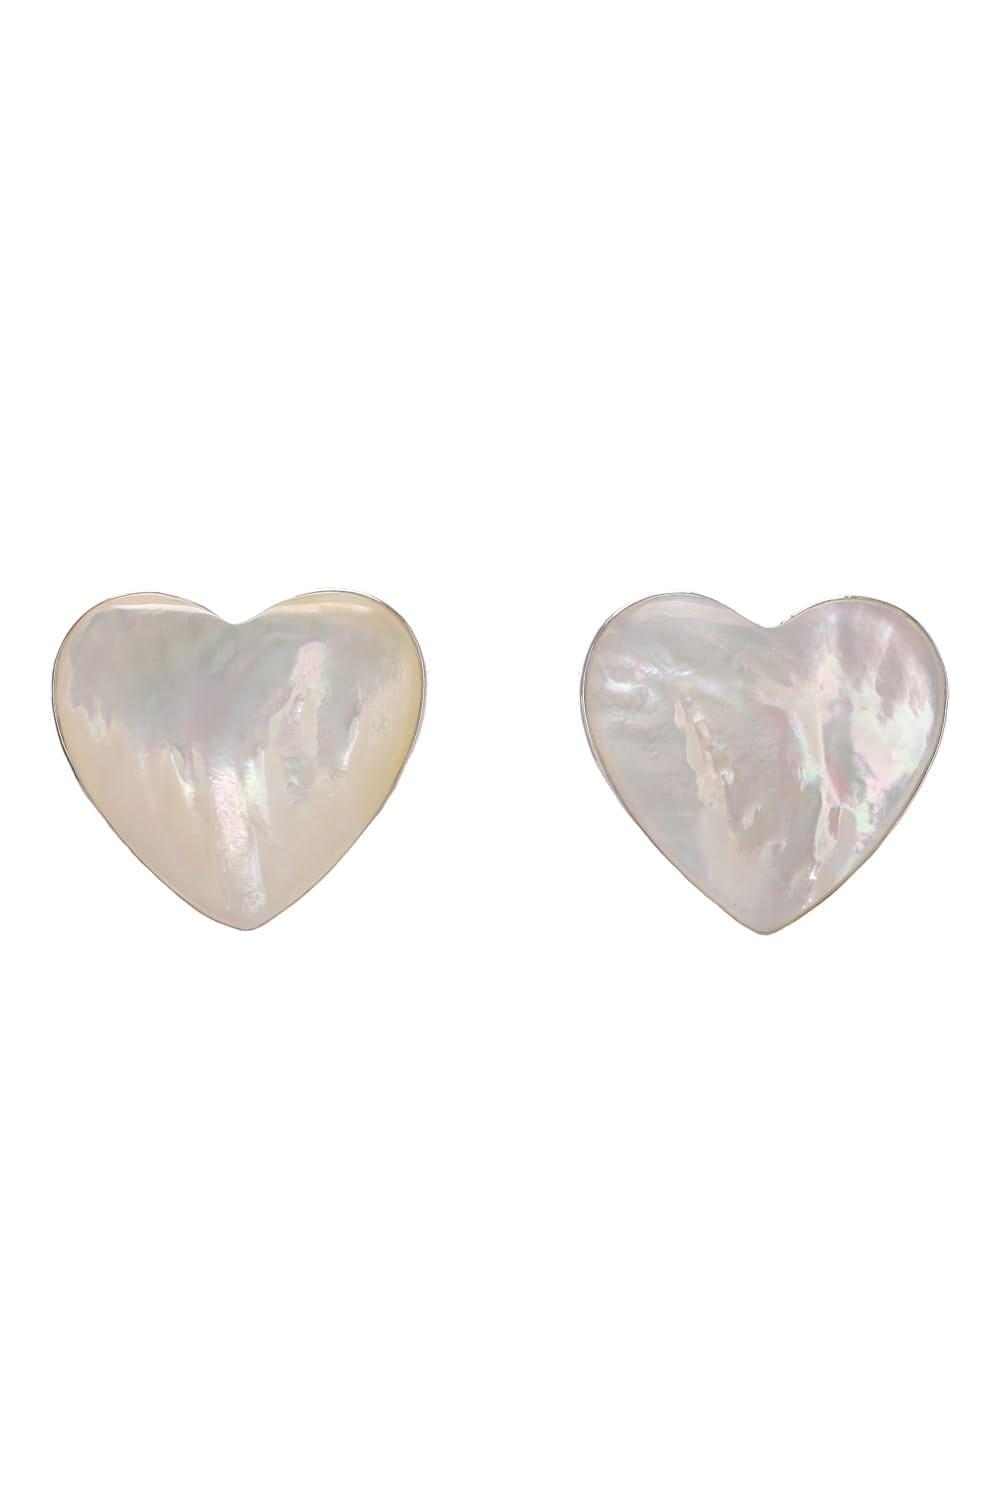 Annika Inez Large Pearl Heart Earrings E977-LRG MOTHER OF PEARL